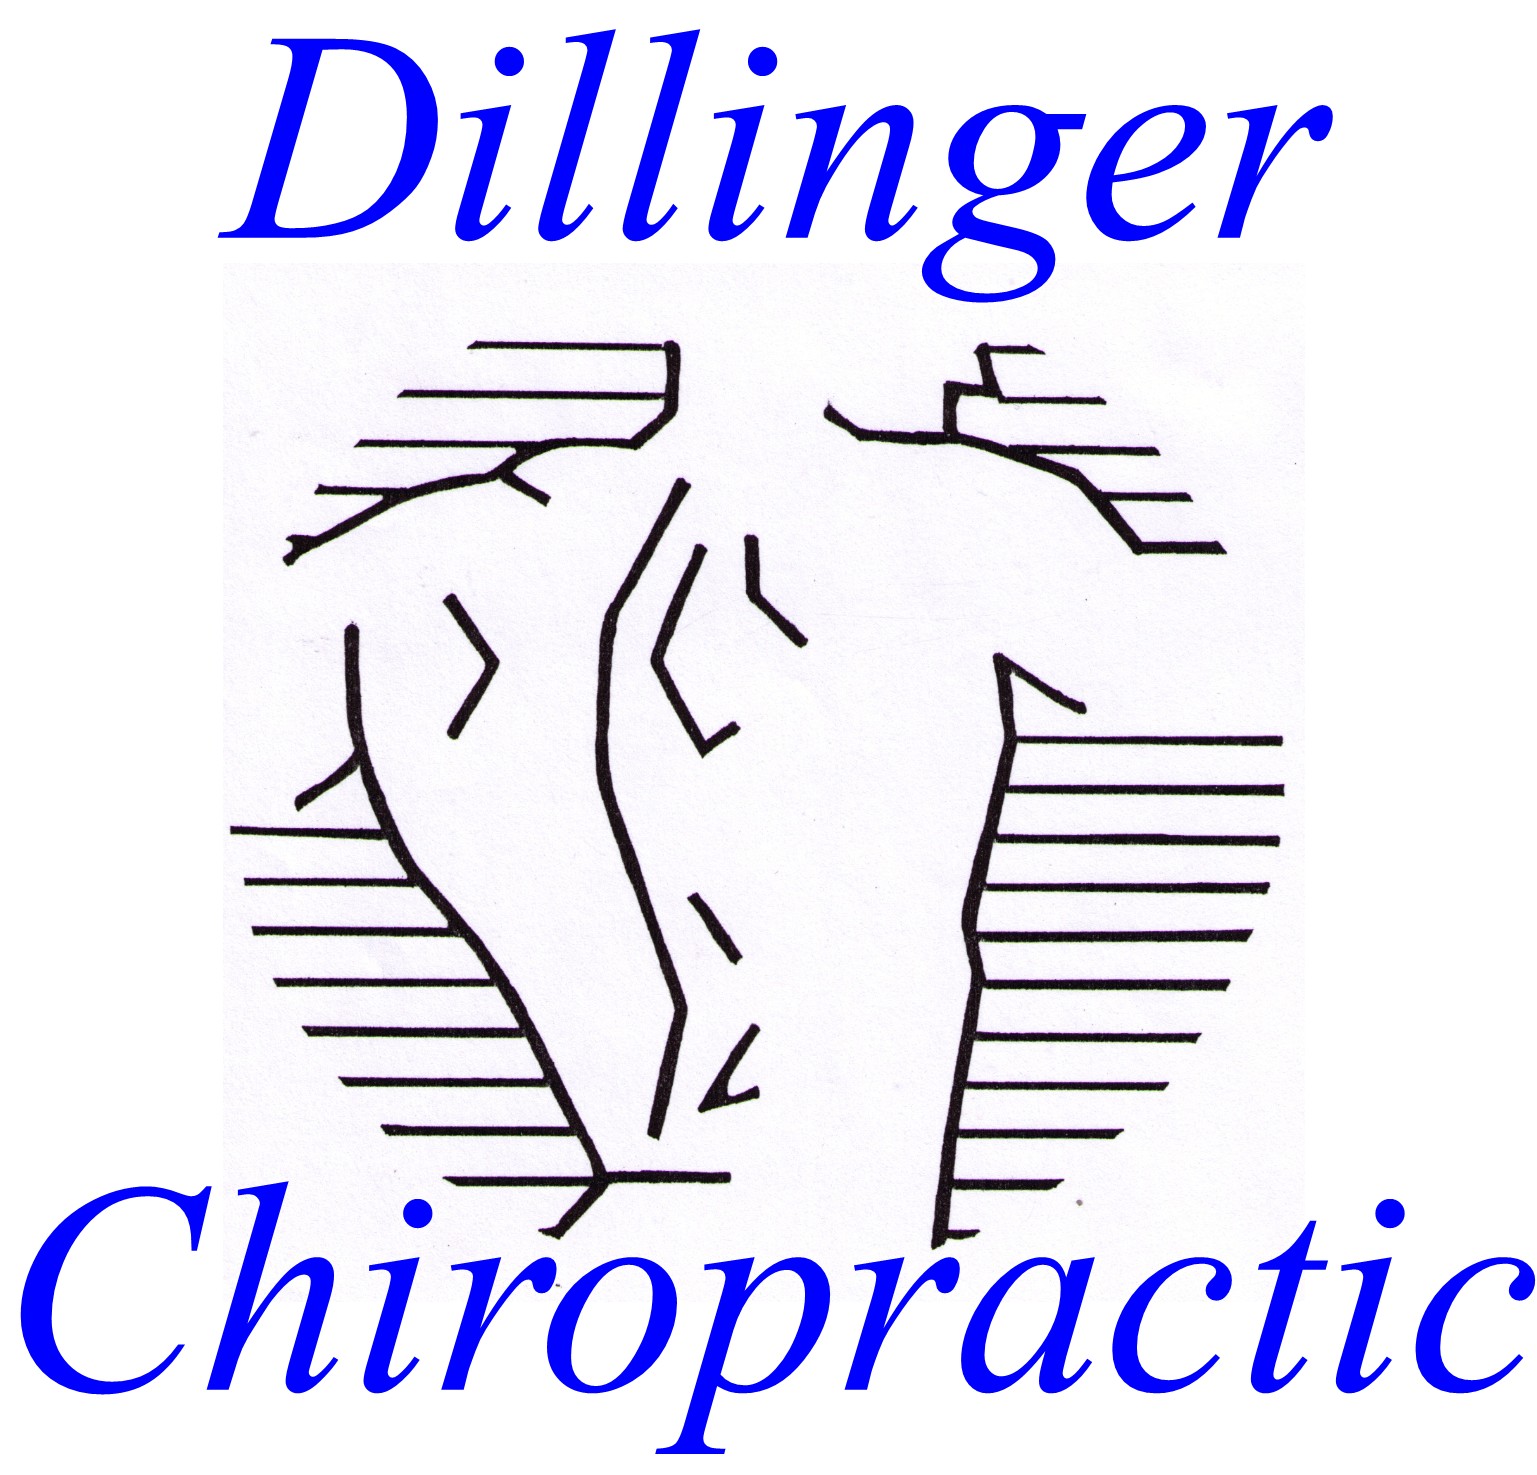 Dillinger Chiropractic logo